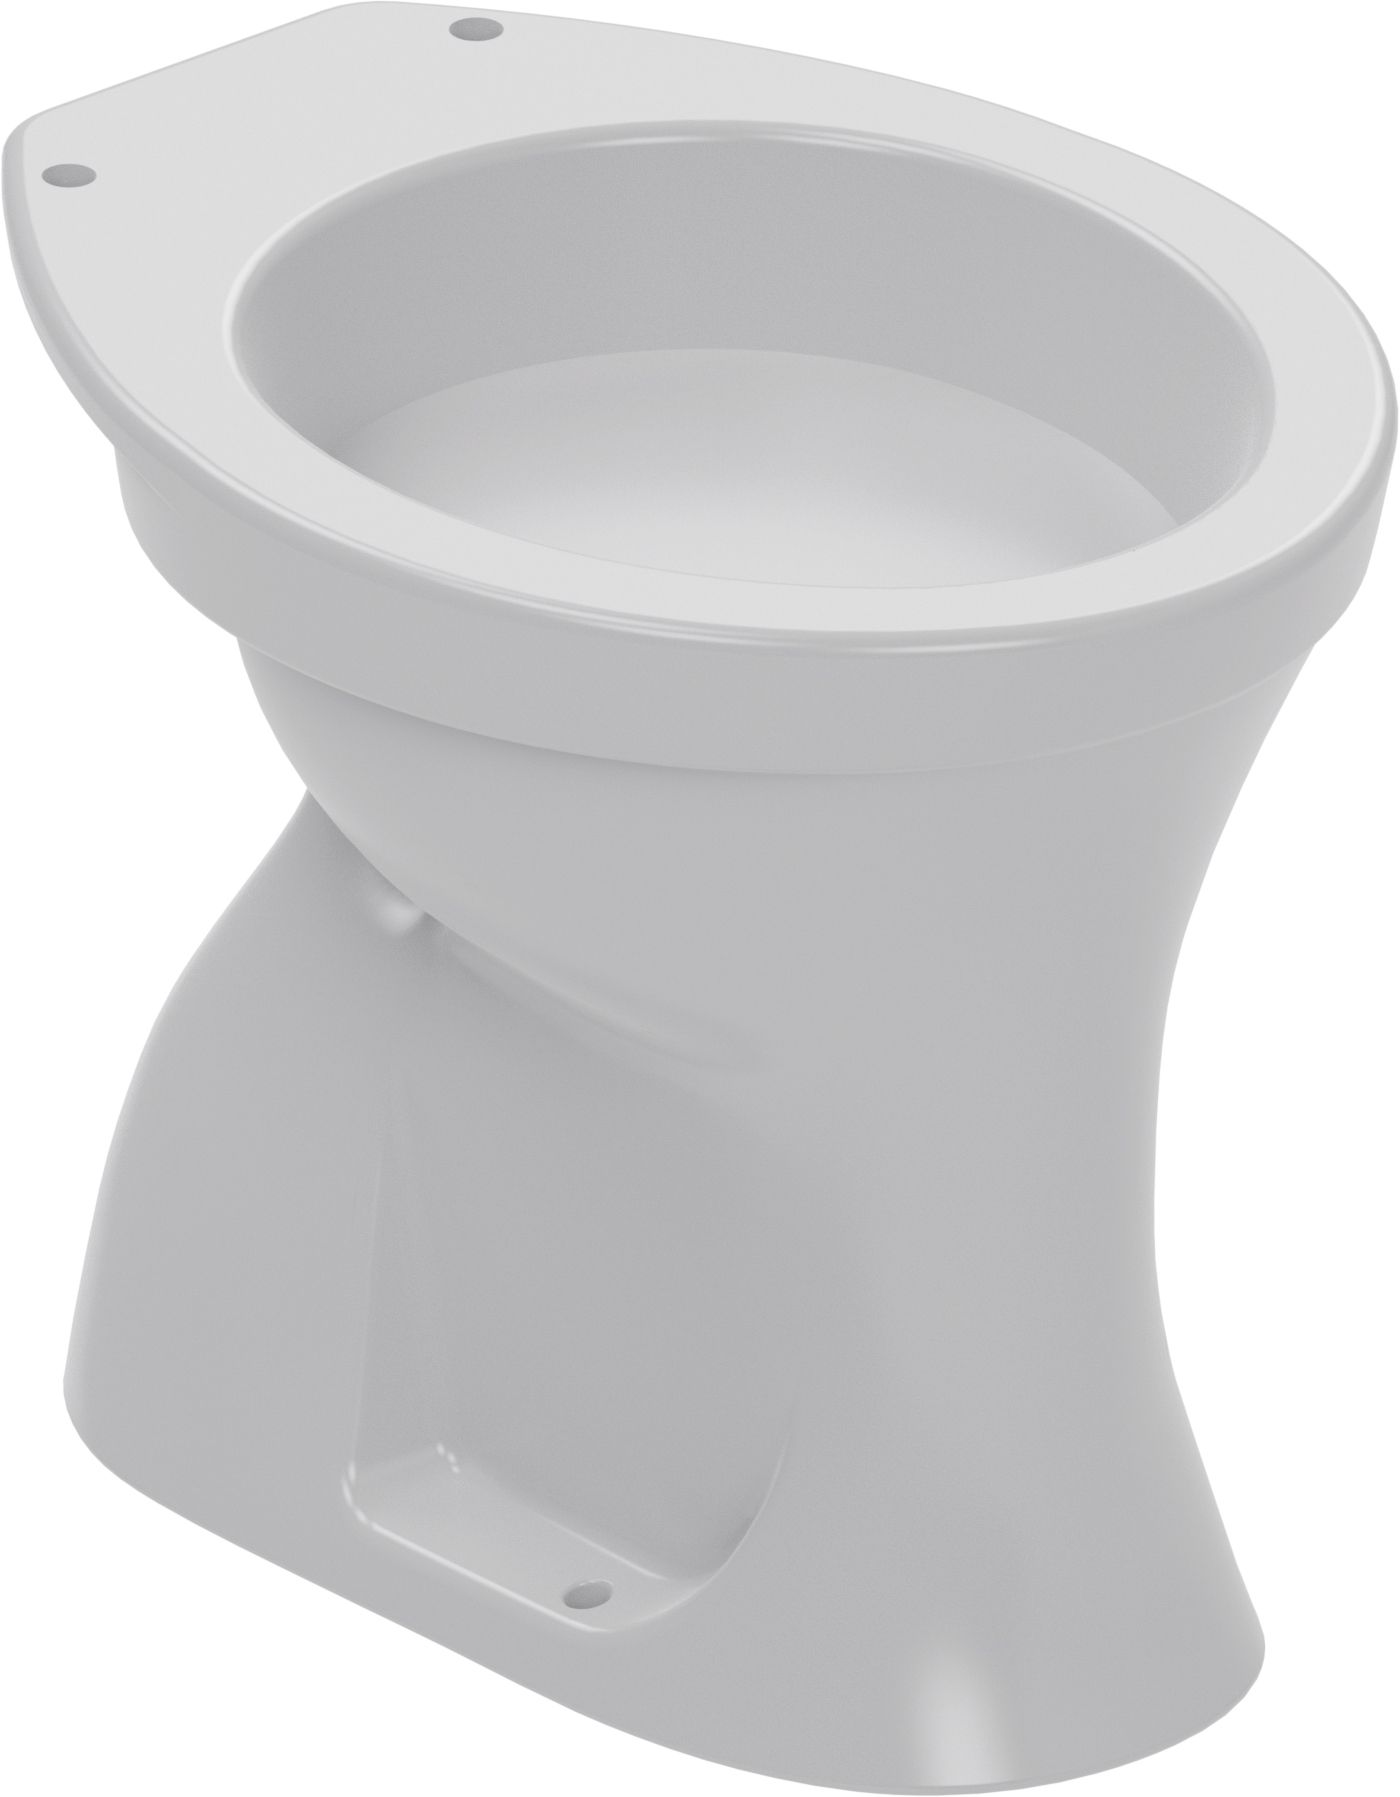 SYDNEY floor mounted toilet bowl, platform, S-trap